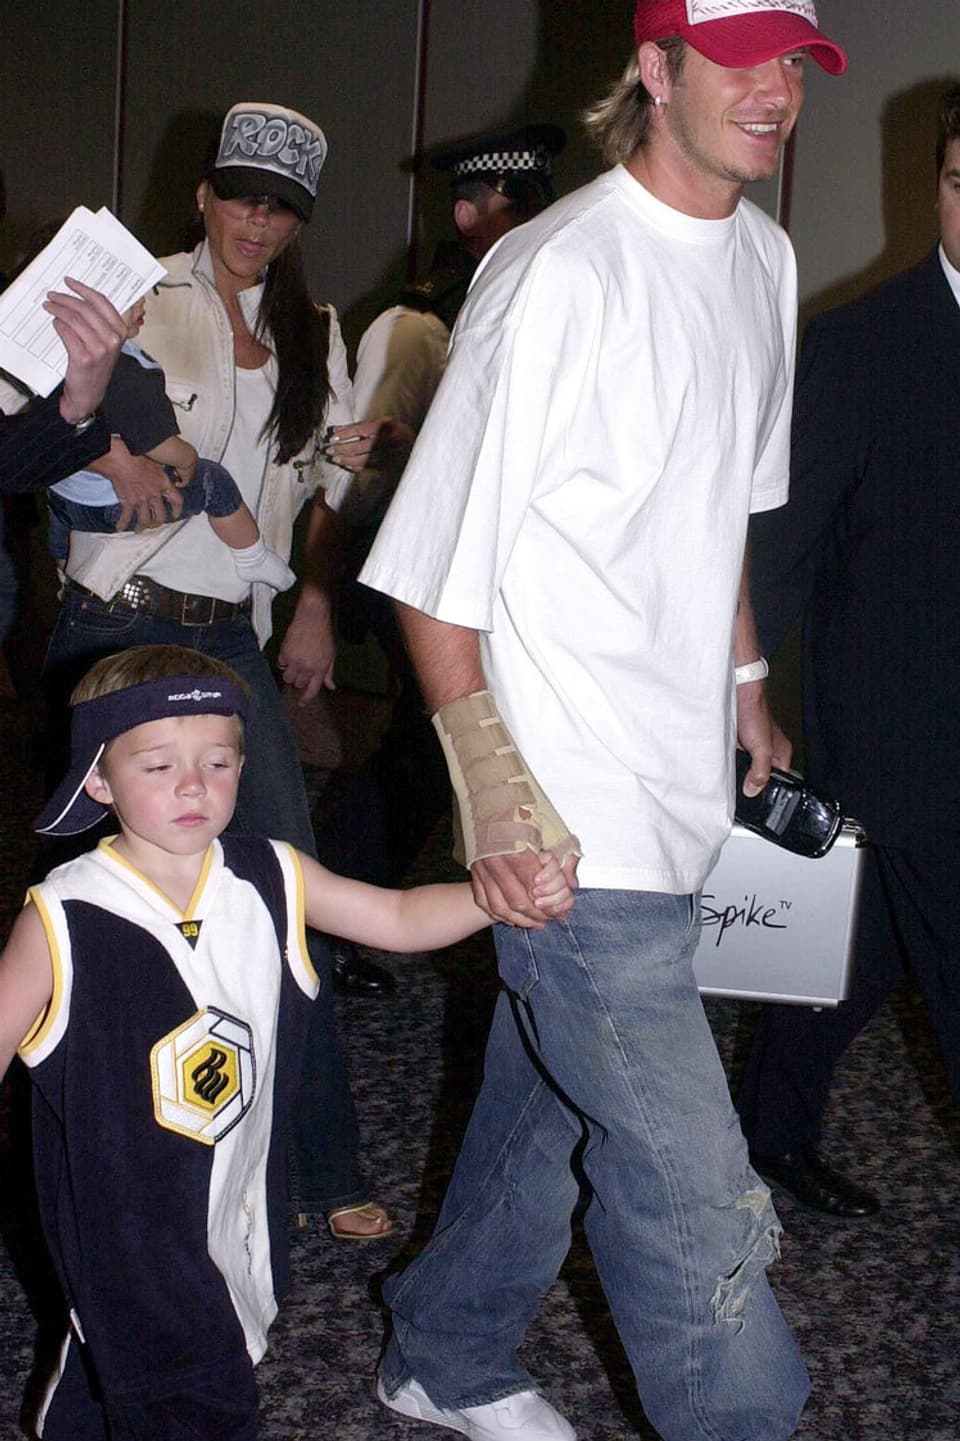 David Beckham mit Sohn Brooklyn